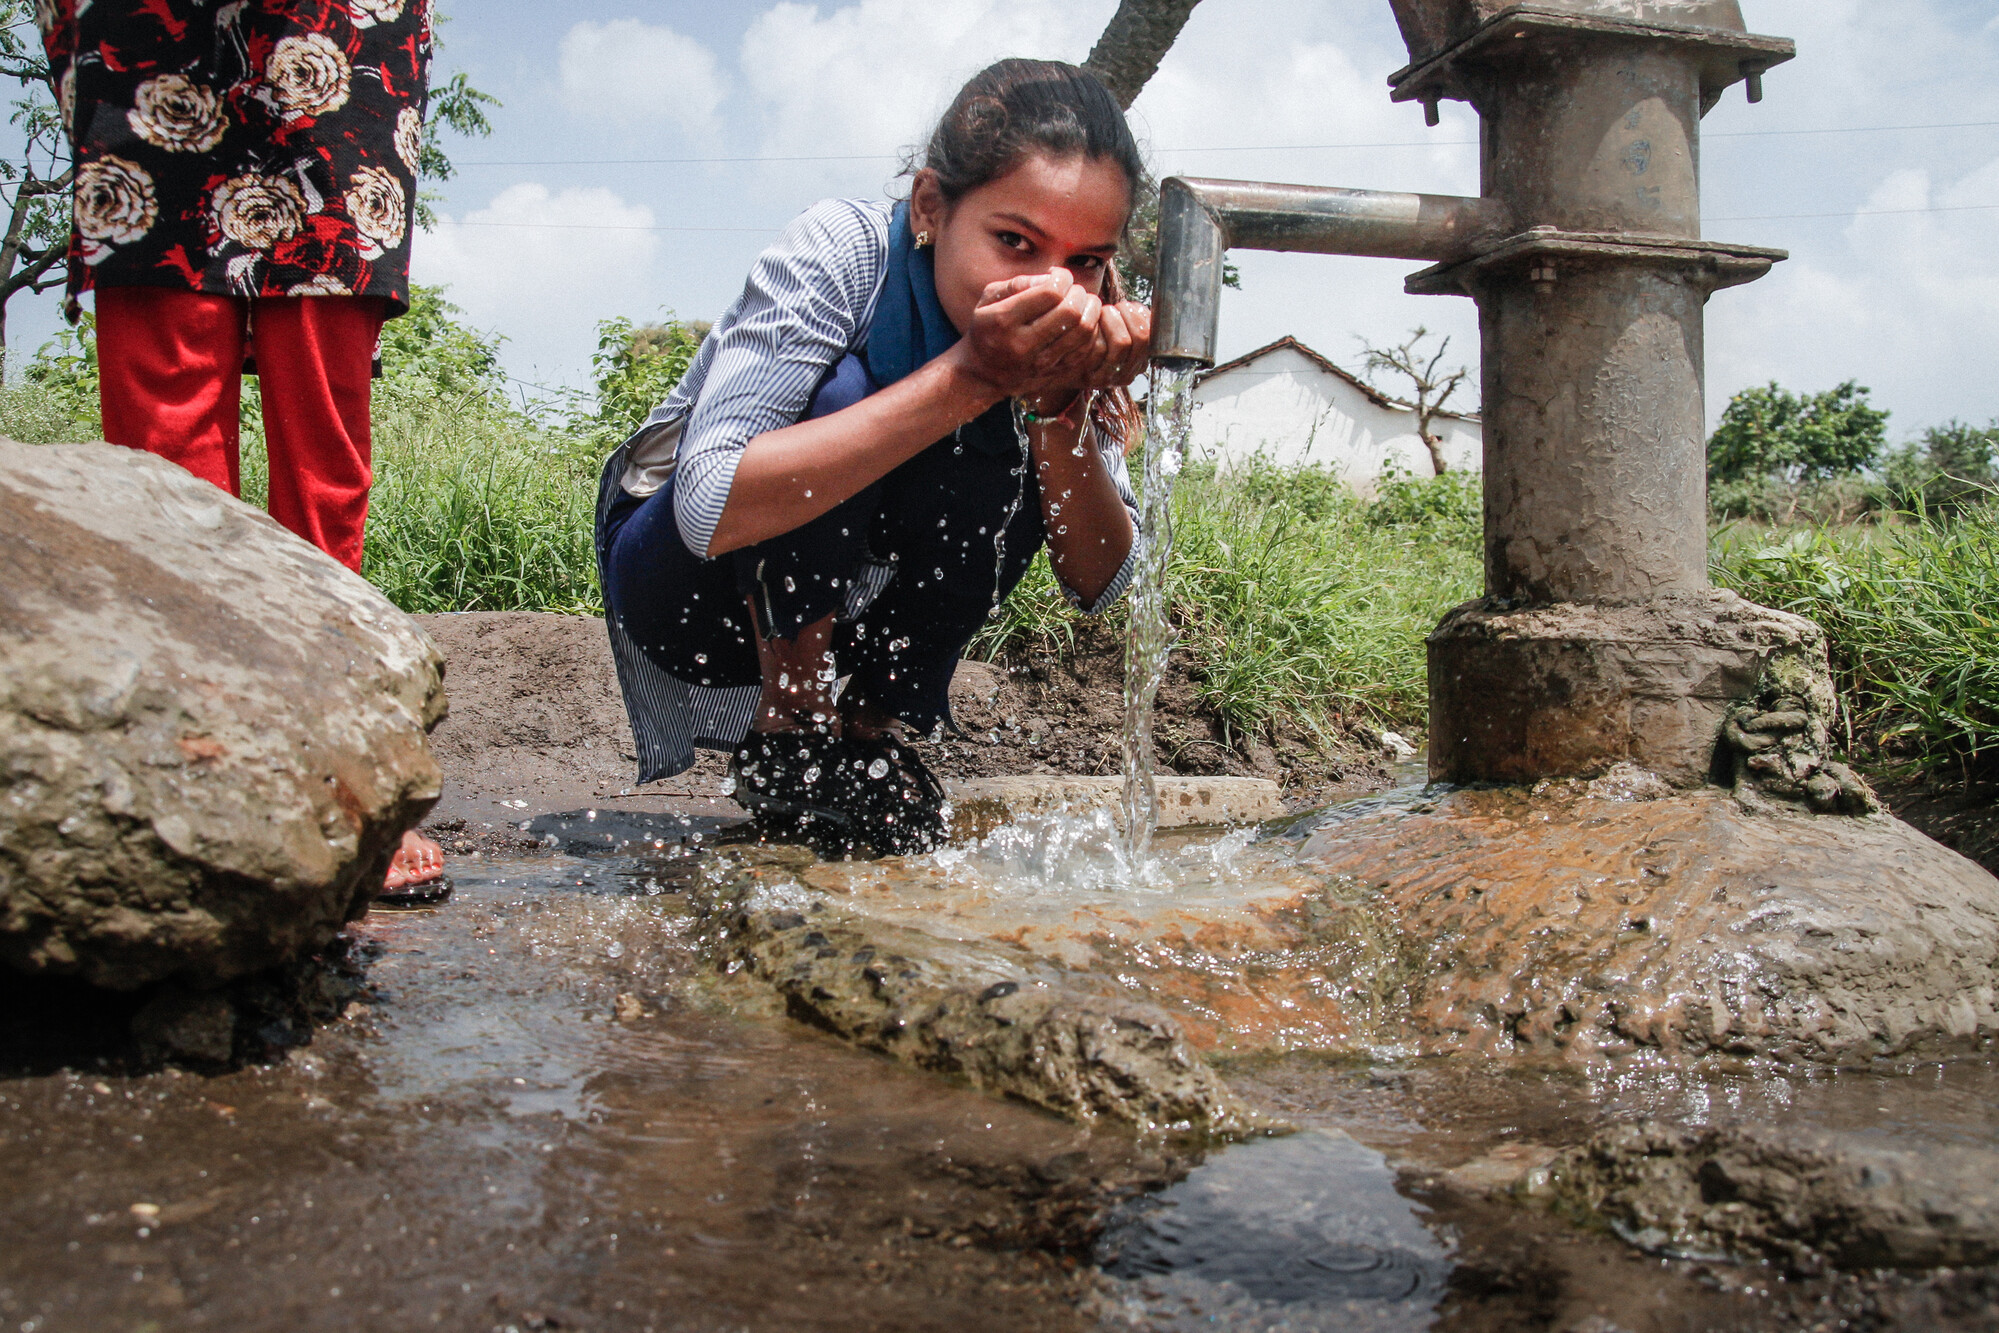 Sanju Mewada's friend drinking water from a handpump at Raipur Nayakheda, Madhya Pradesh, India, September 2018.